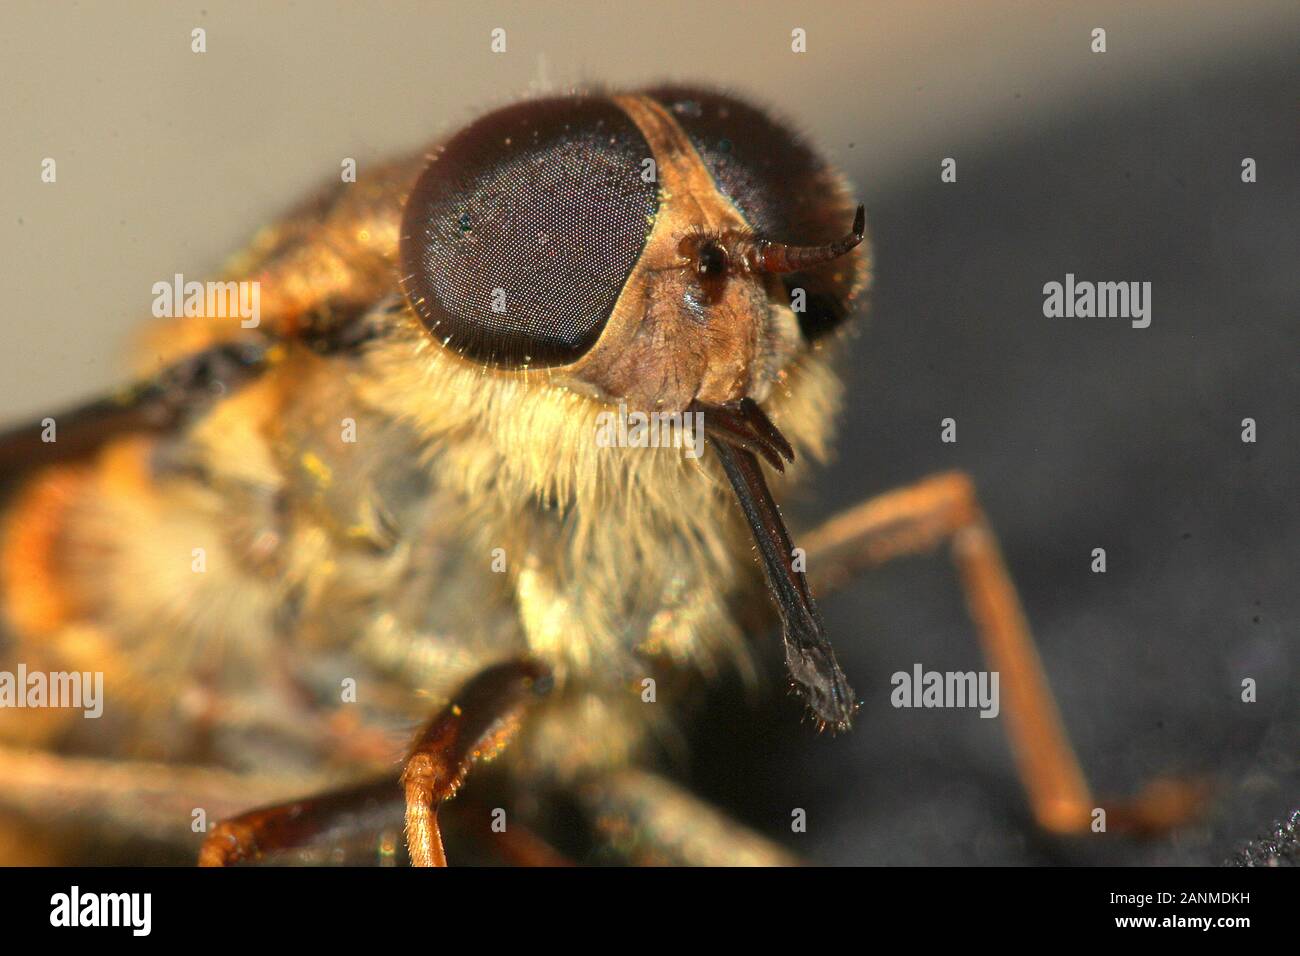 Portrait of a Hoverfly (Eristalis tenax) Stock Photo